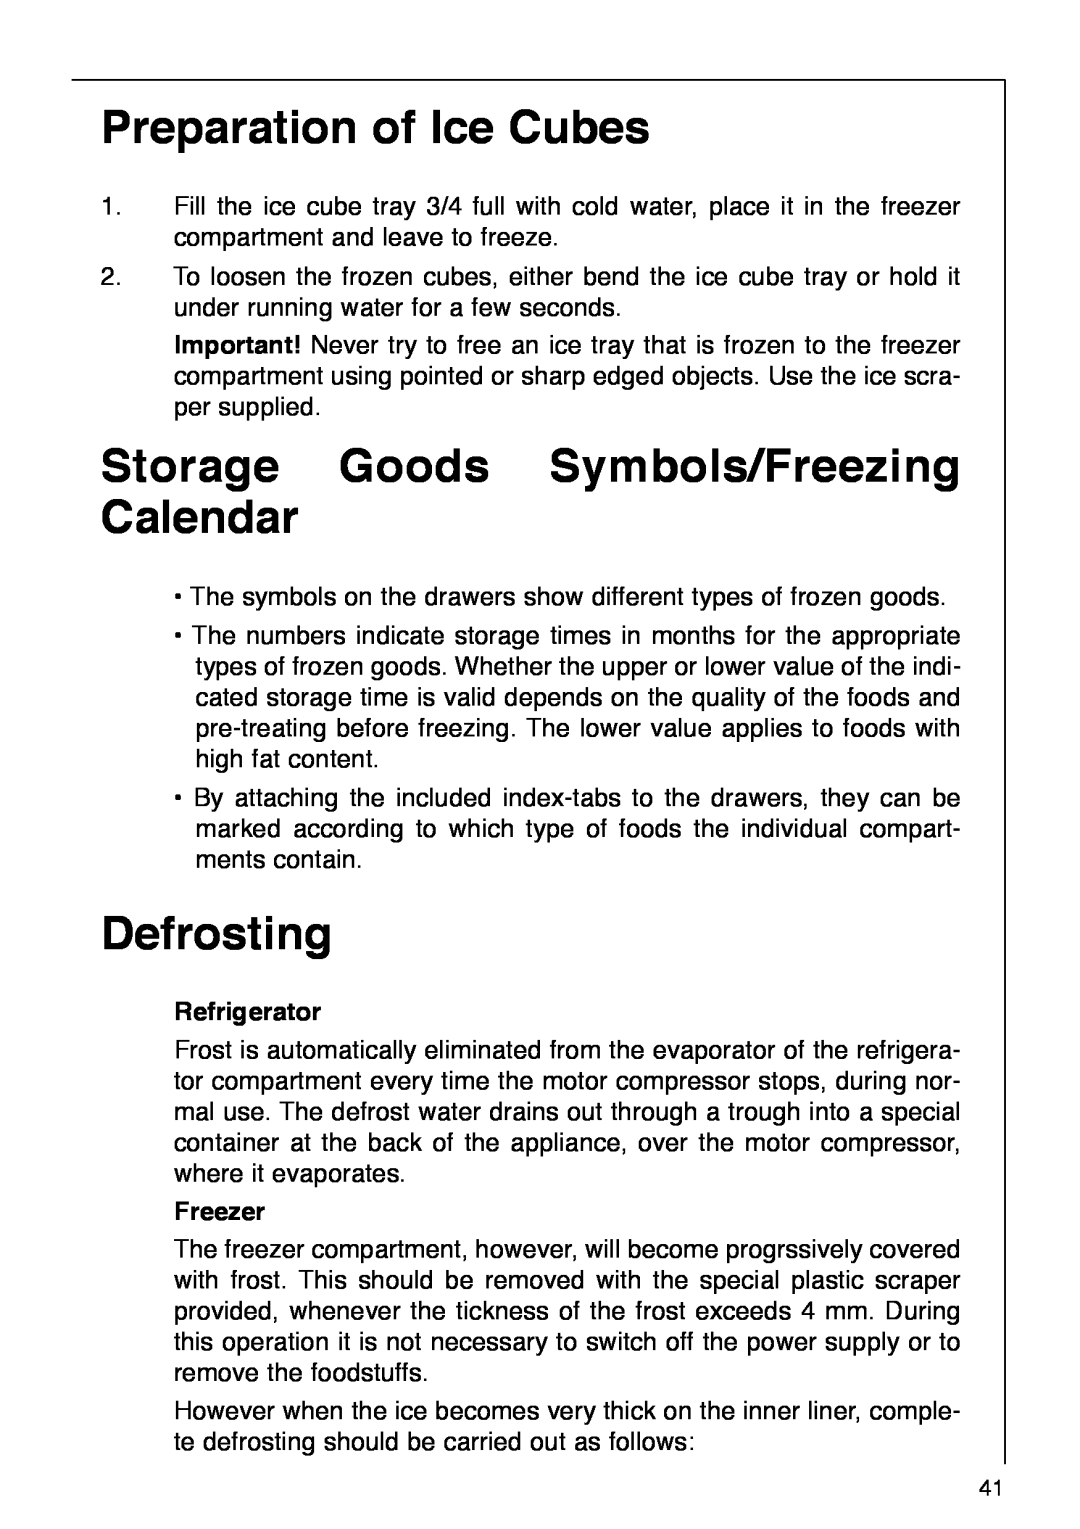 AEG 290-6I Preparation of Ice Cubes, Storage Goods Symbols/Freezing Calendar, Defrosting, Refrigerator, Freezer 